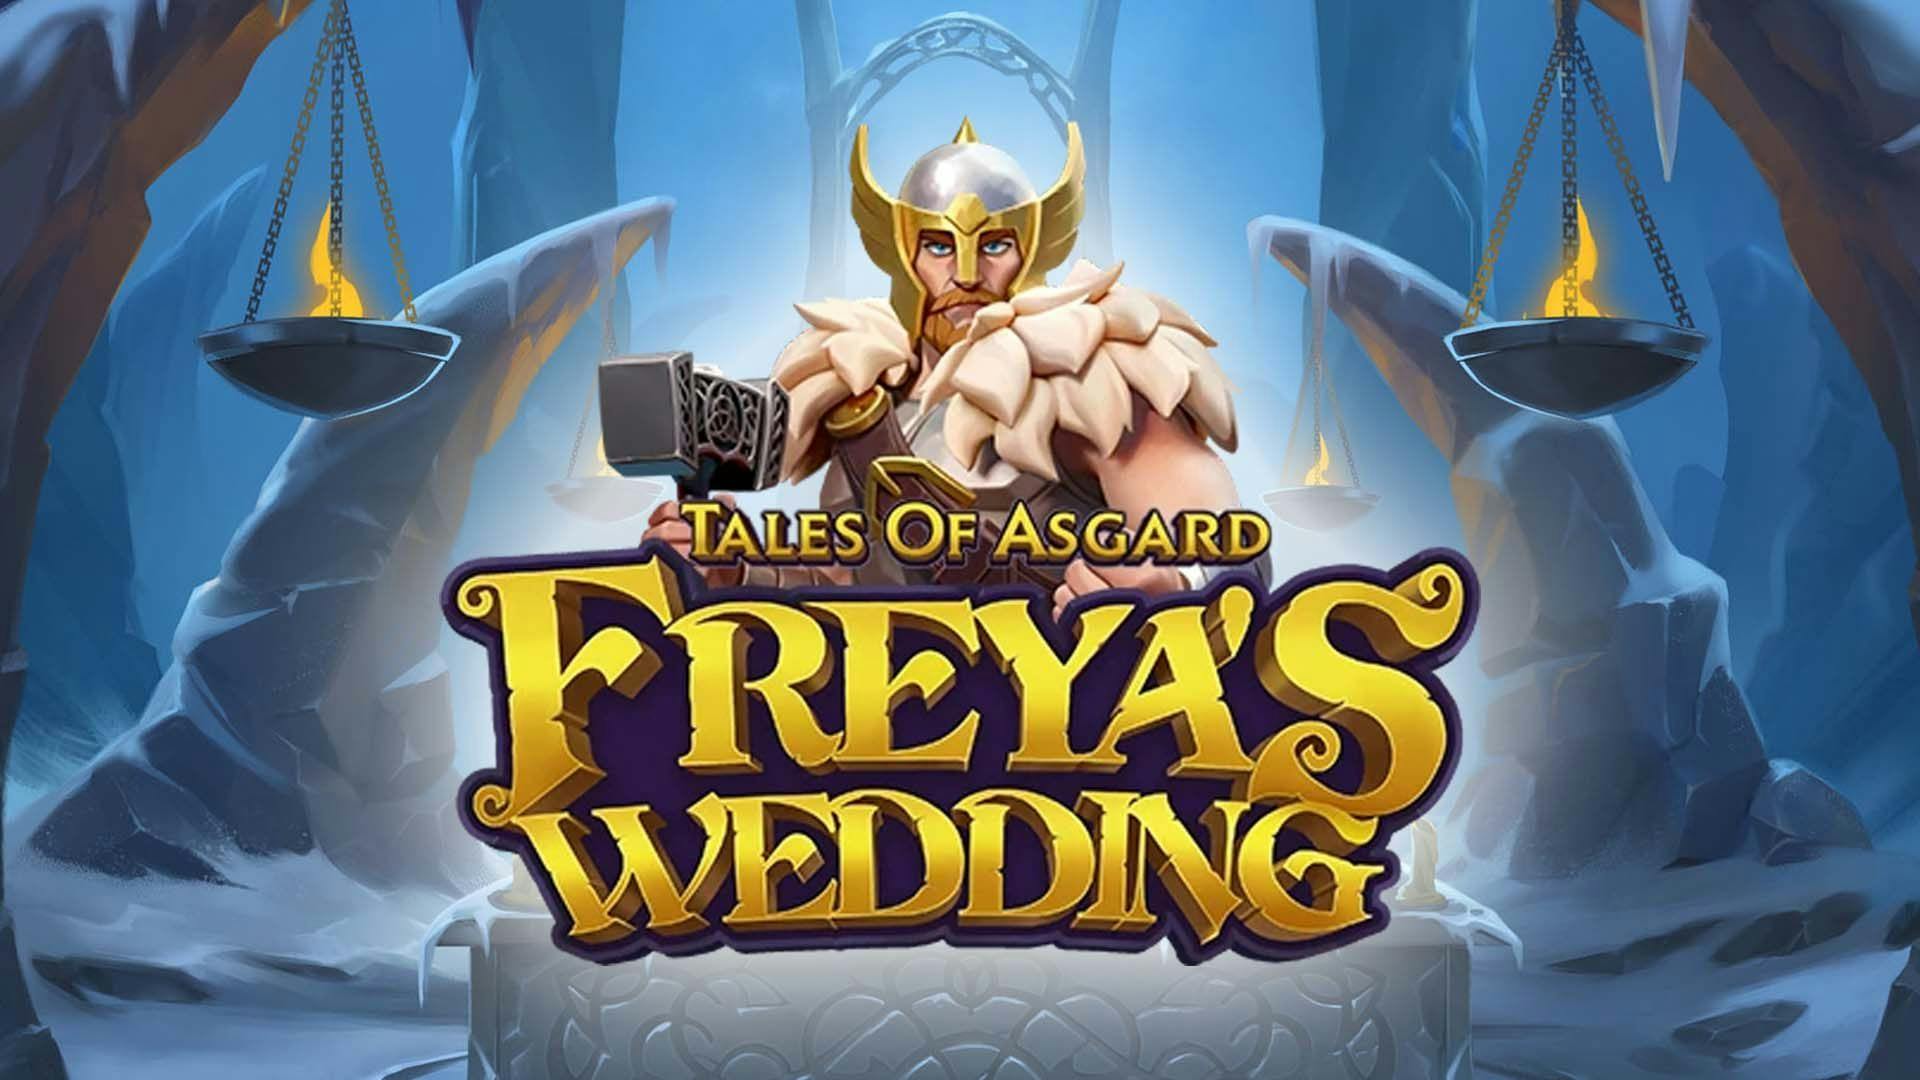 Tales Of Asgard Freya's Wedding Slot Machine Online Free Game Play